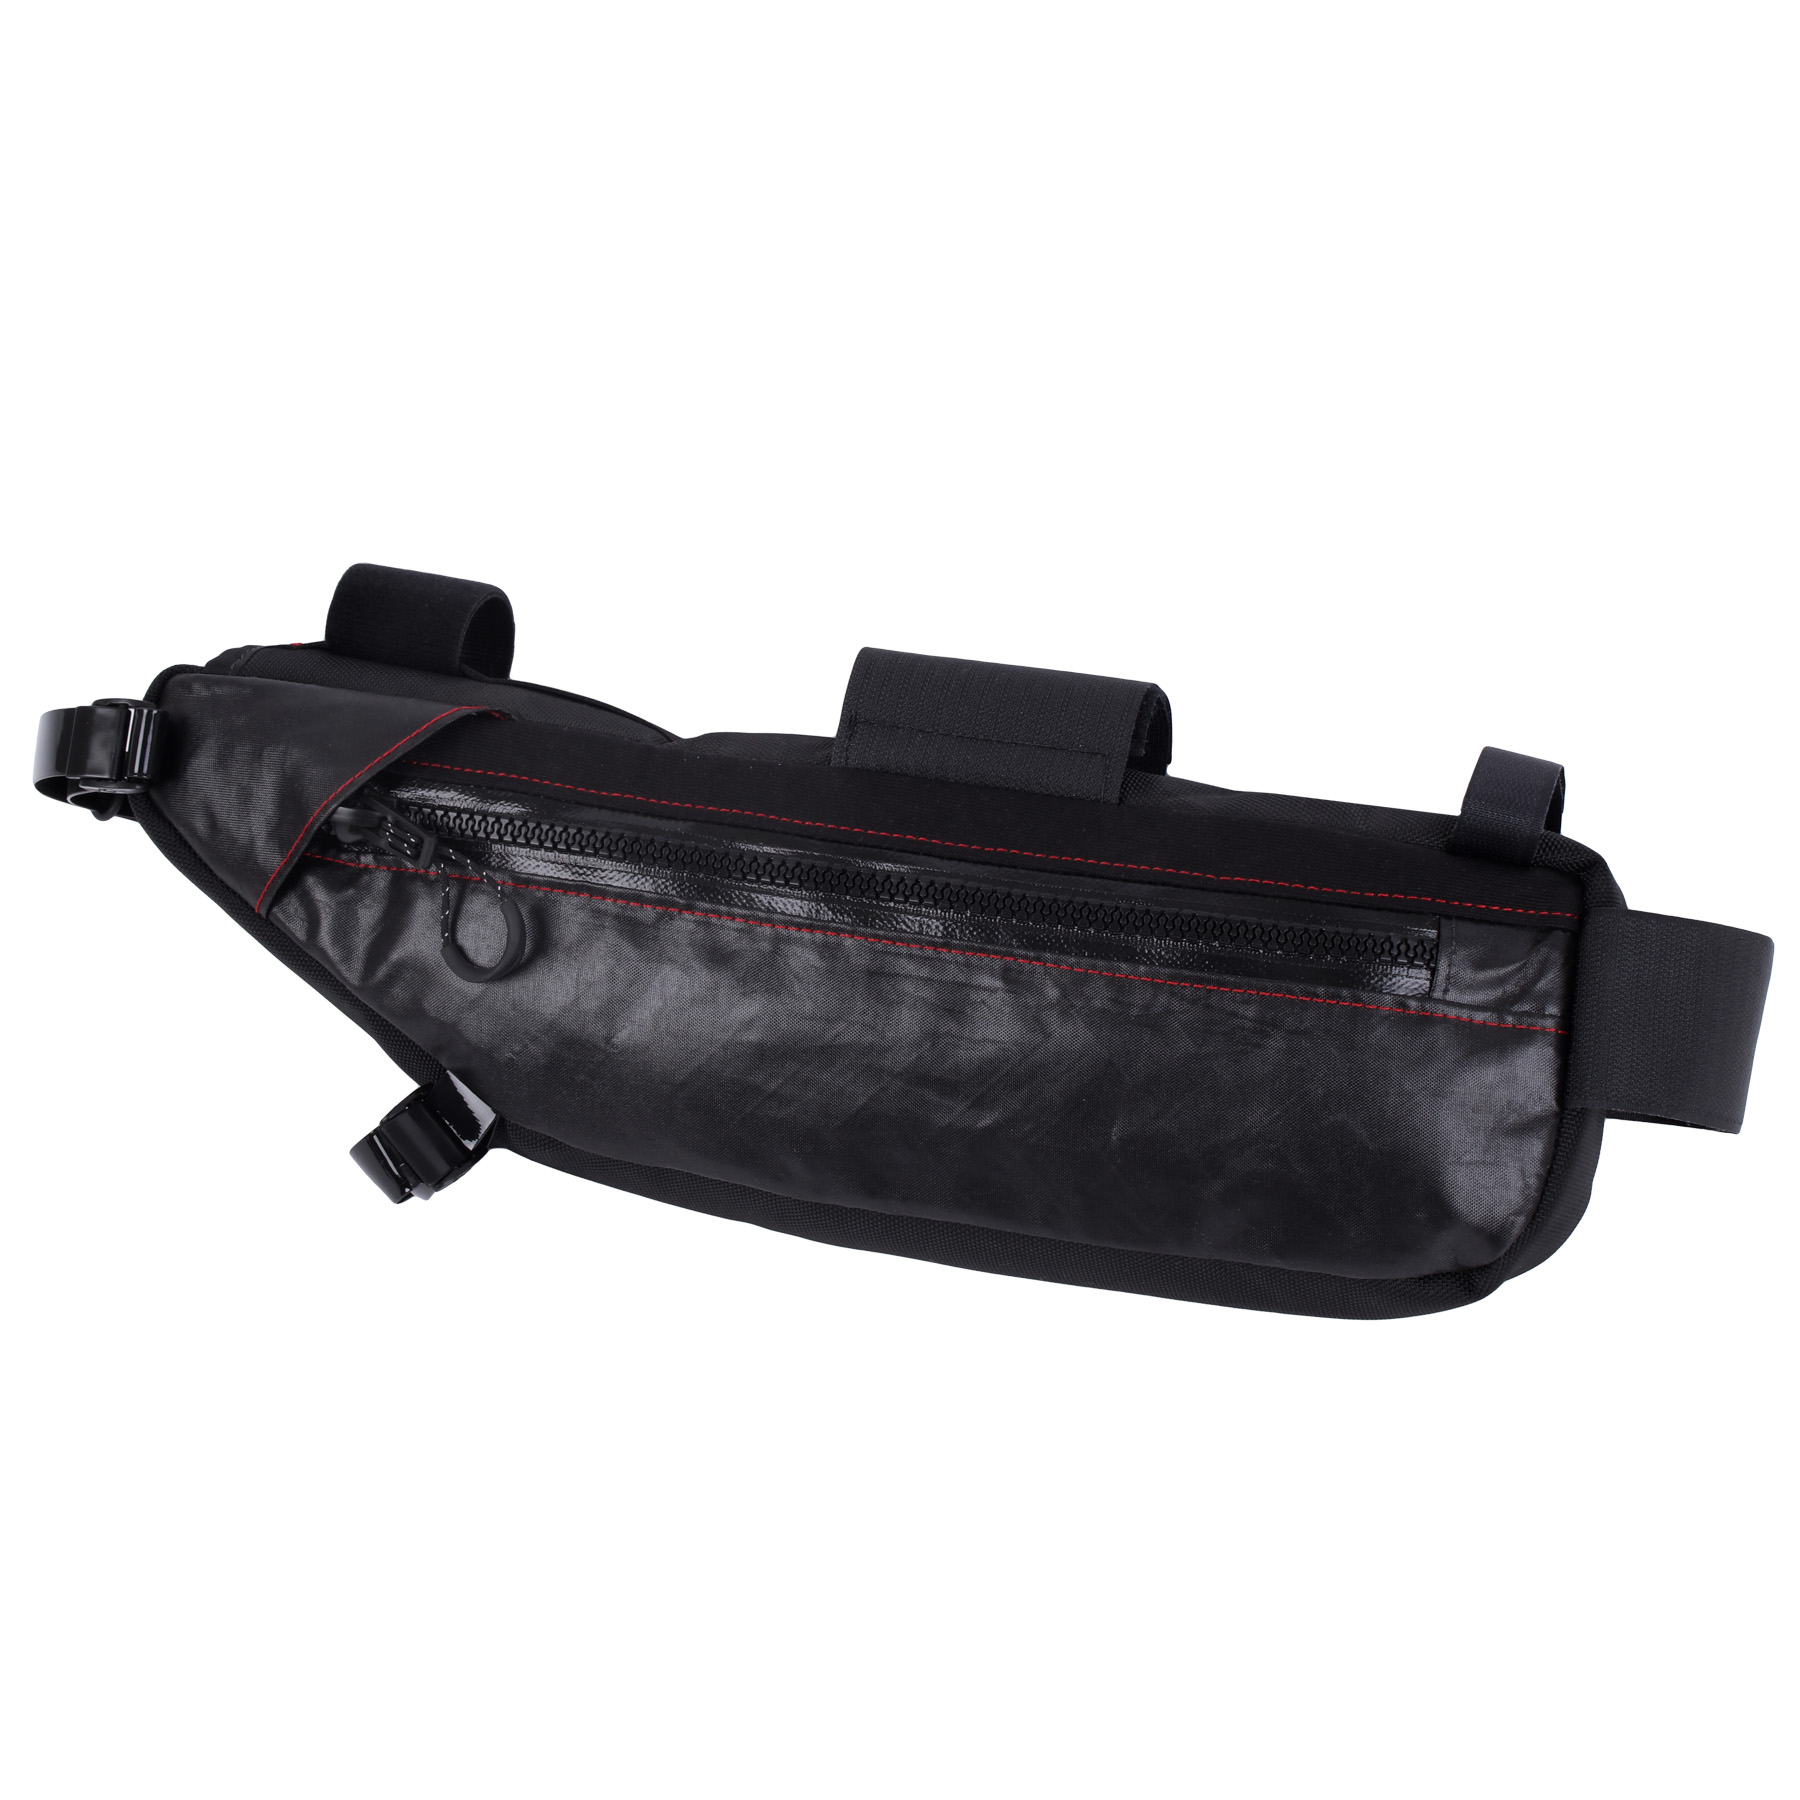 Revelate Designs Tangle EcoPac Frame Bag - 3L - black - XS